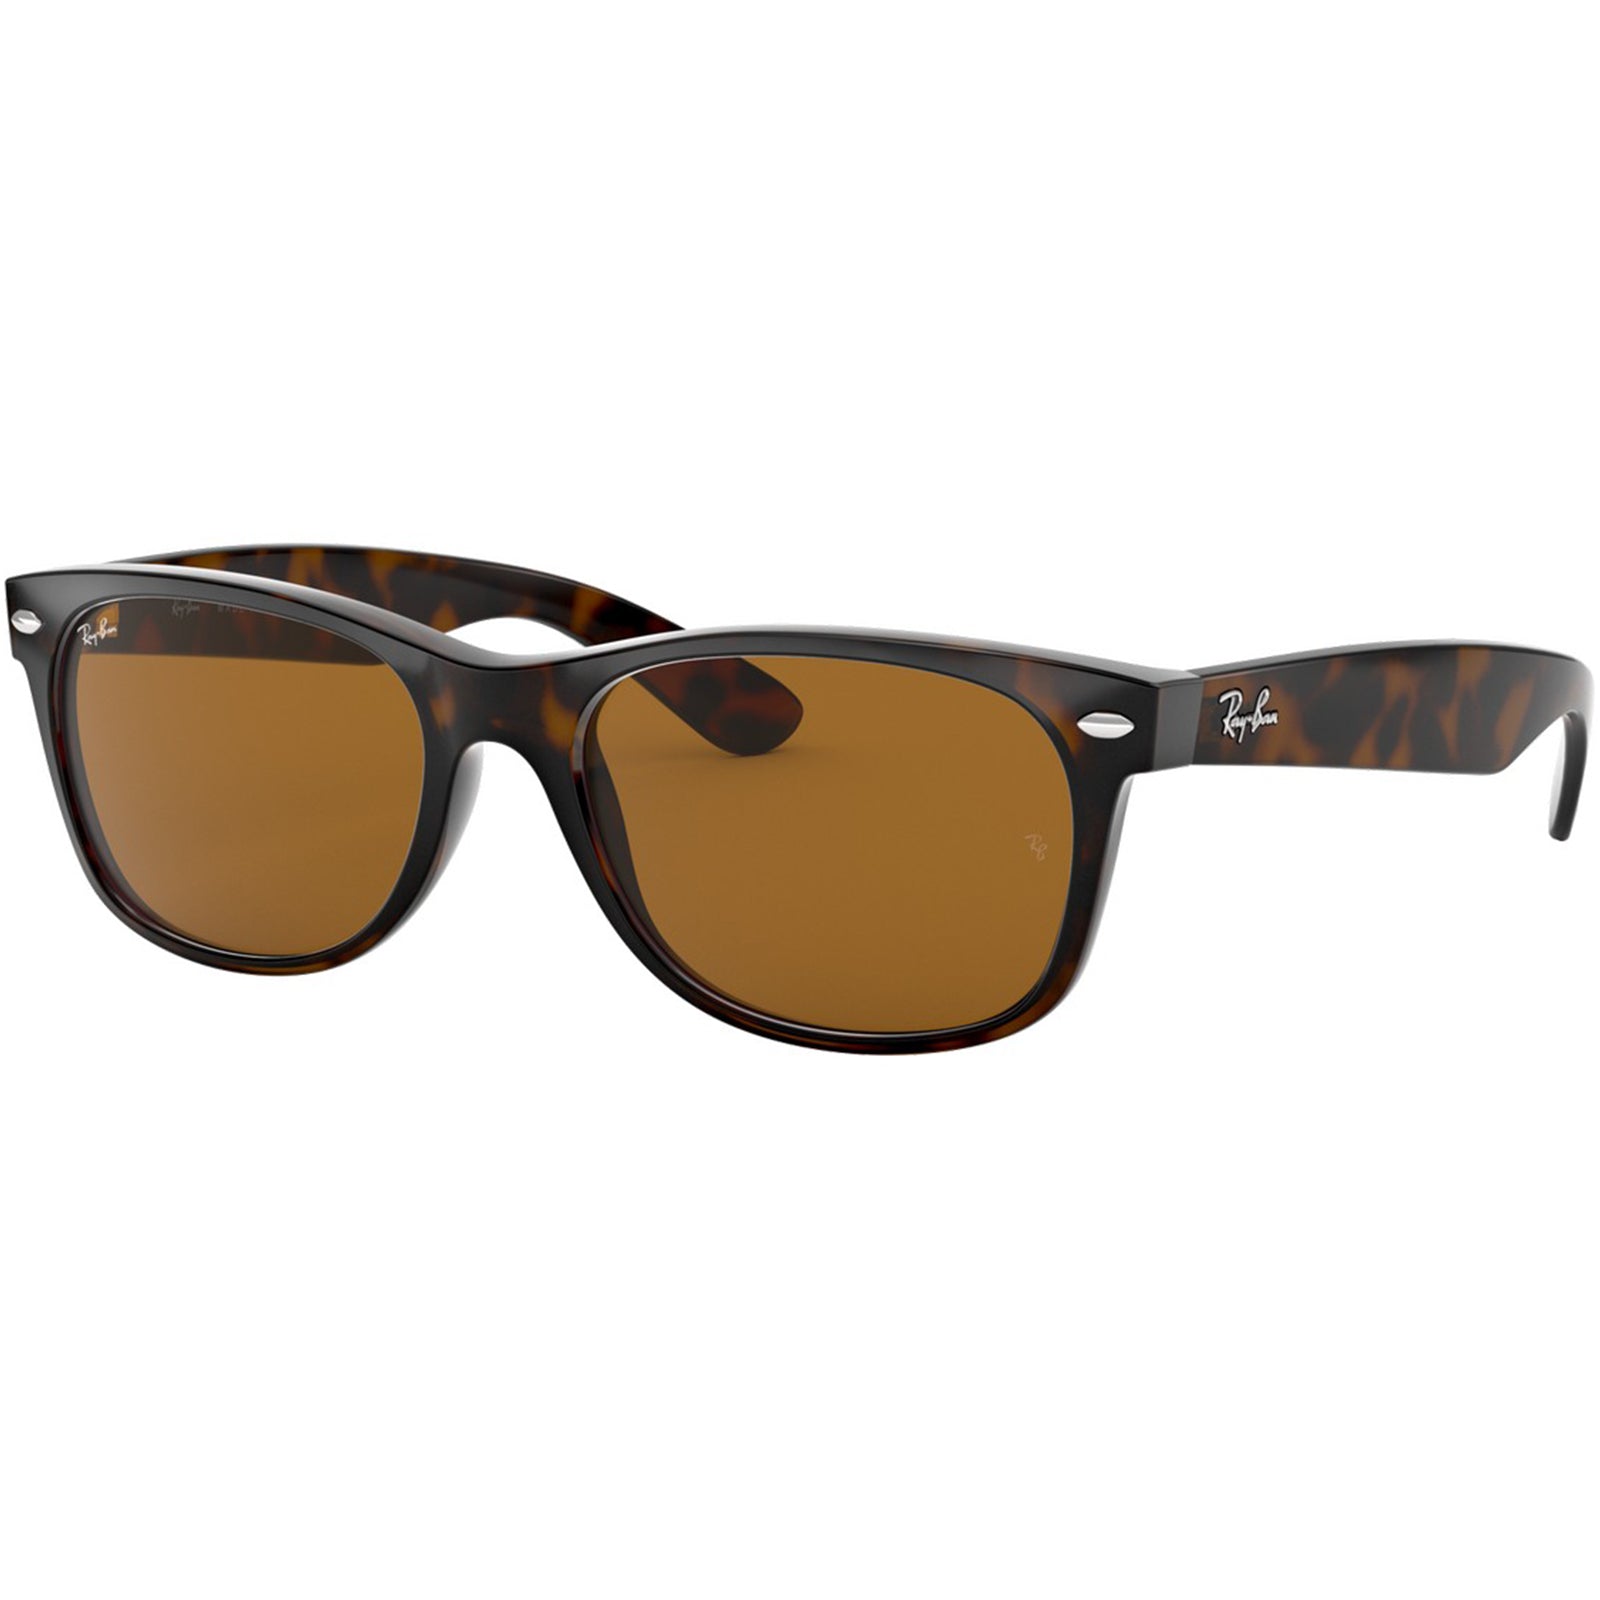 Ray-Ban New Wayfarer Classic Adult Lifestyle Sunglasses-0RB2132